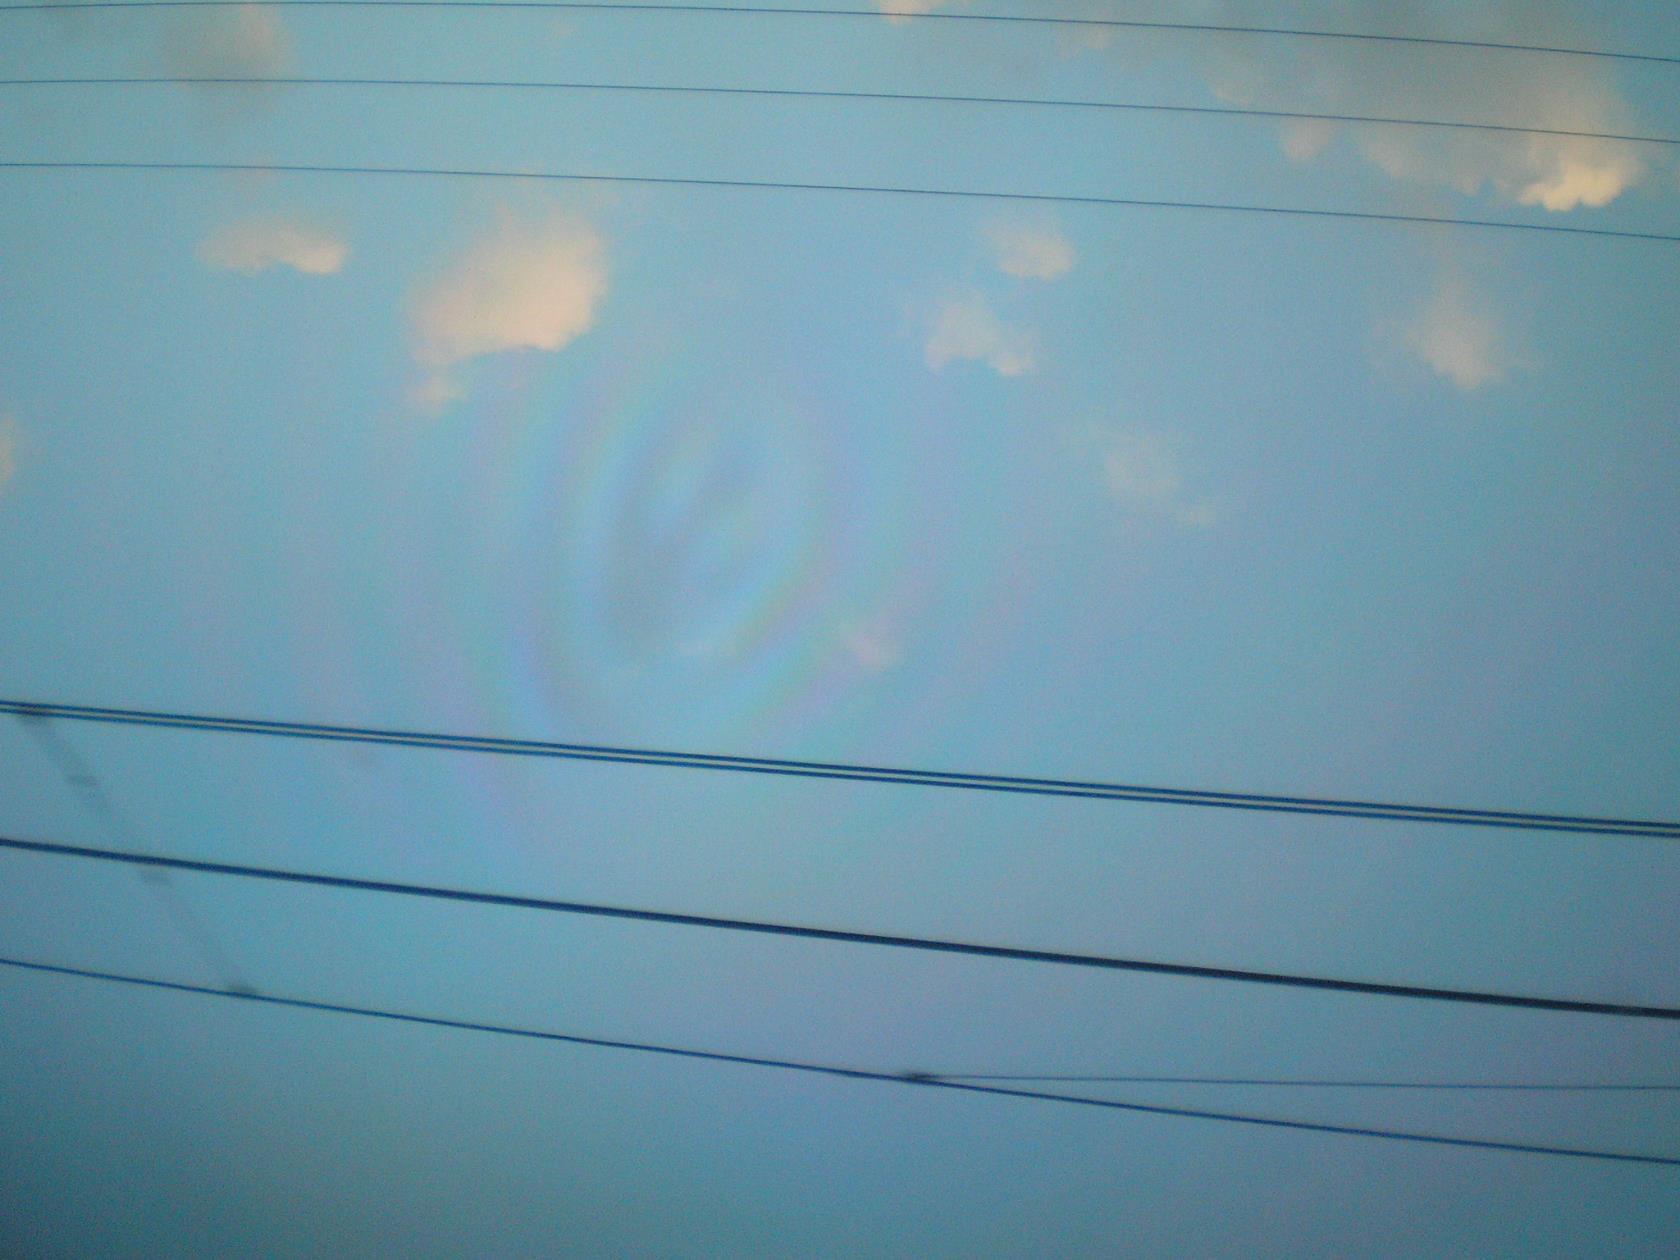  Спиральная радуга в небе (фото и видео) - фото 5